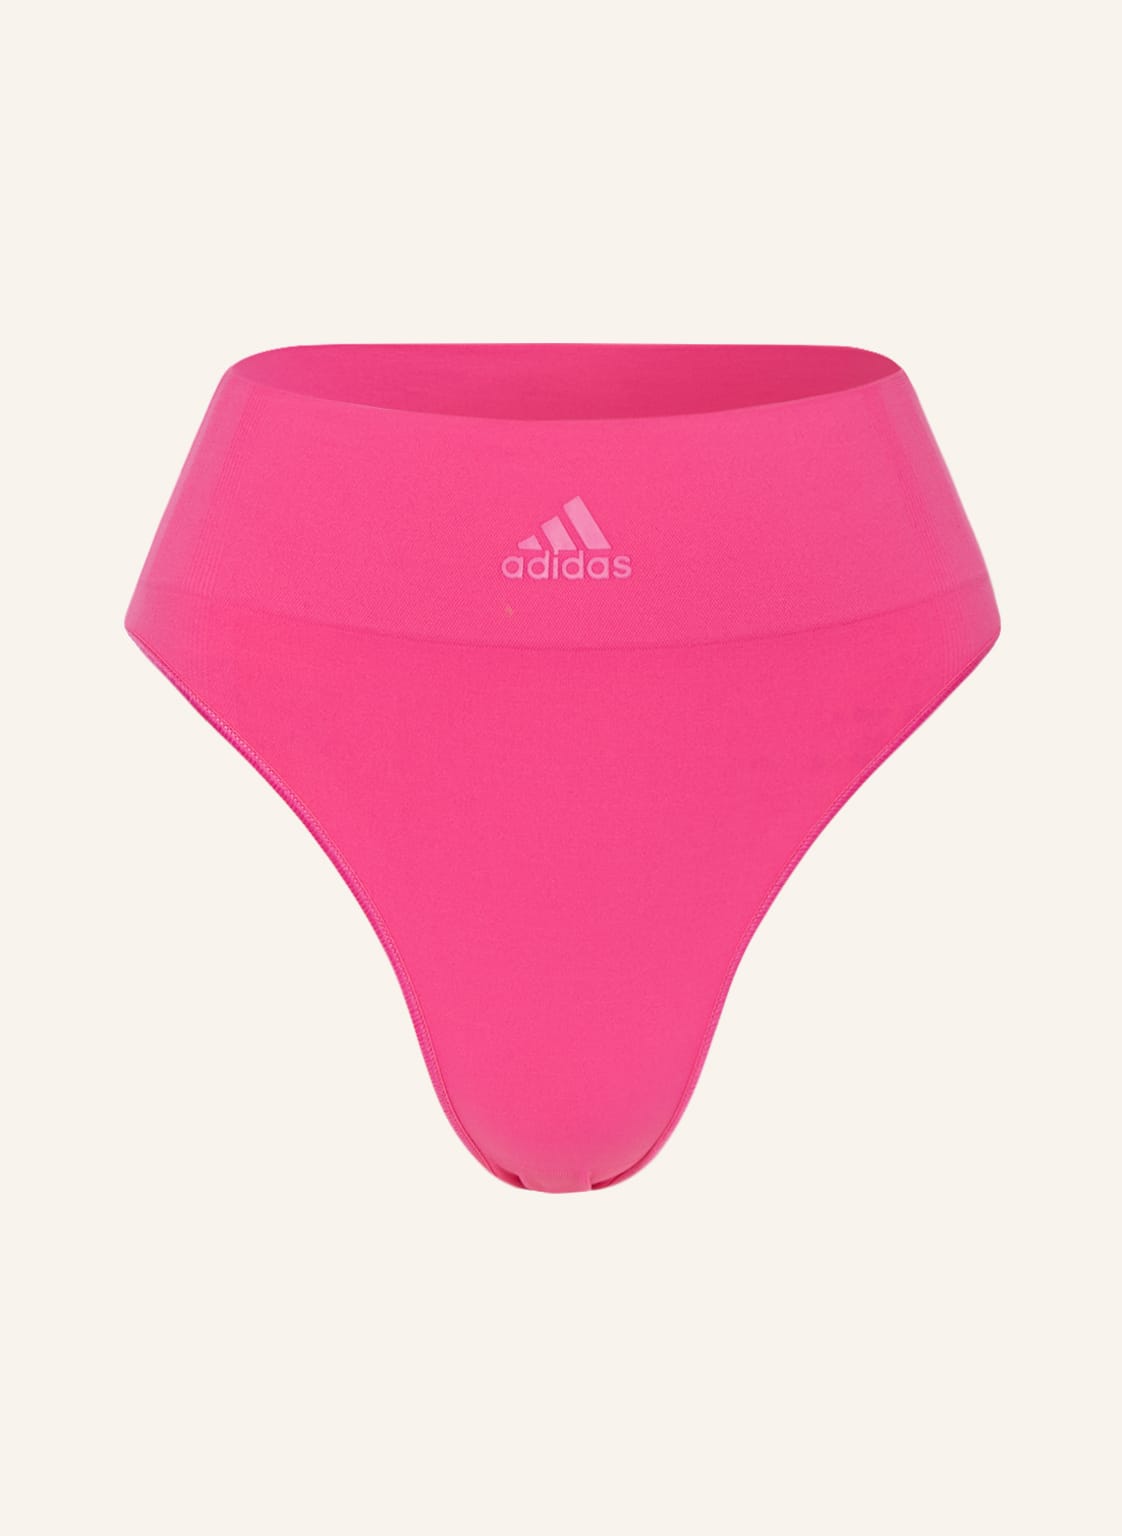 Image of Adidas Taillenslip pink